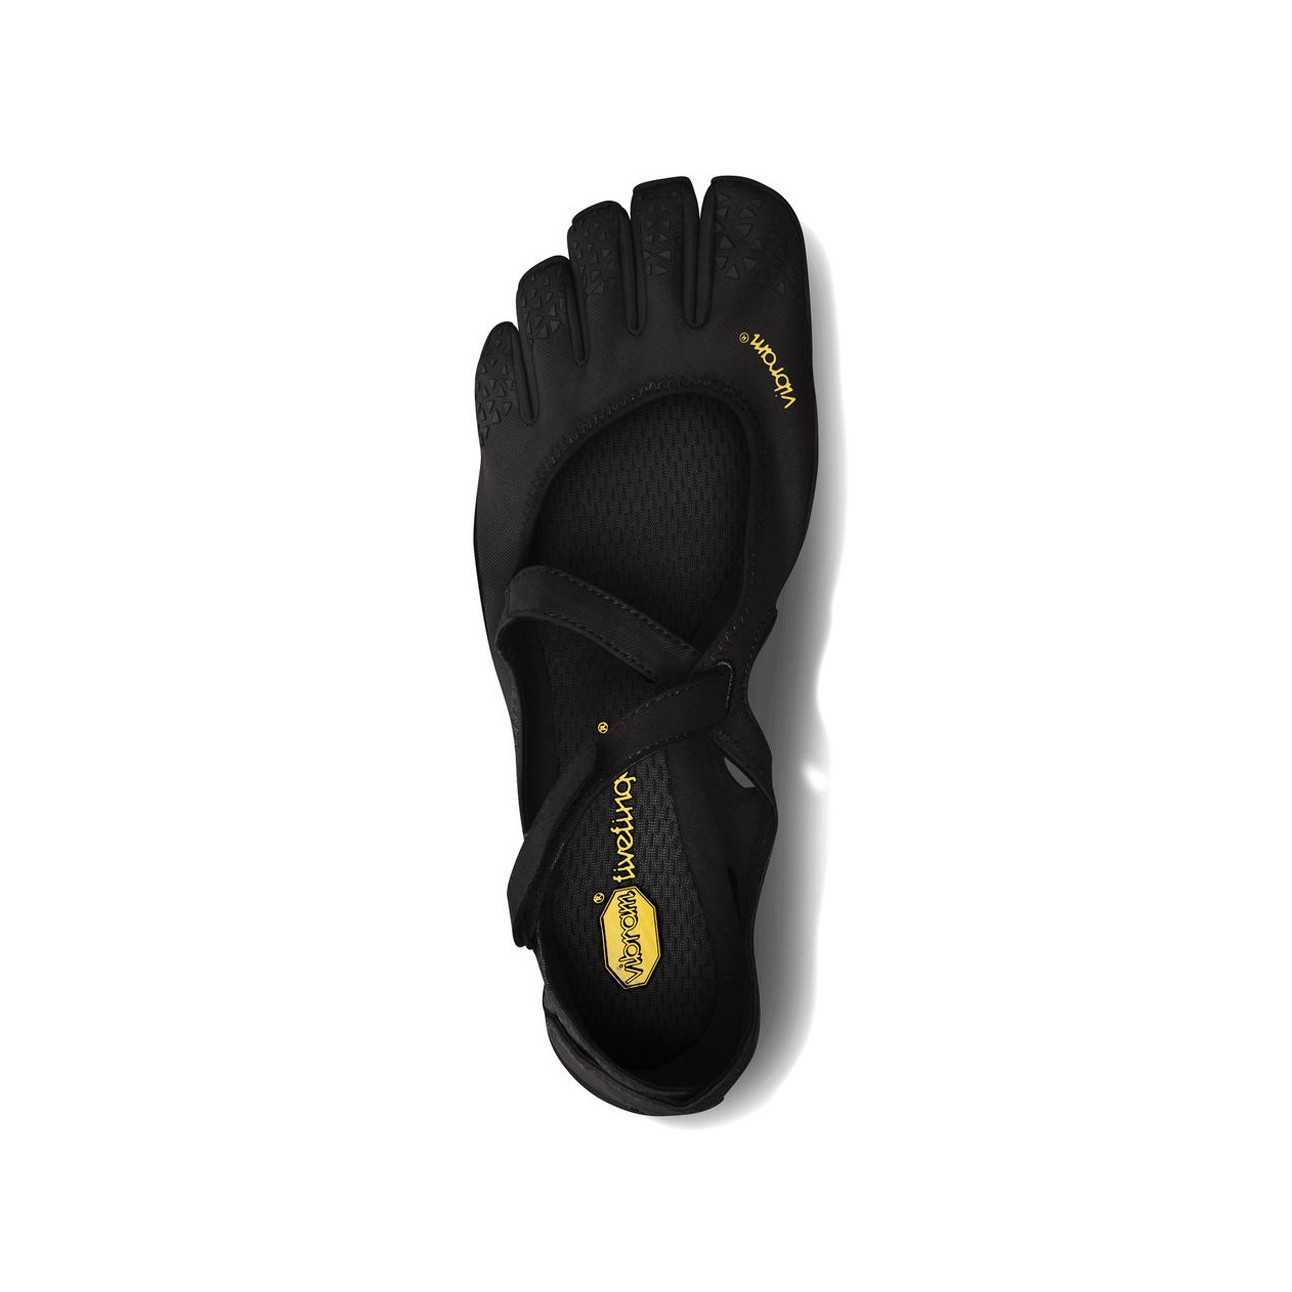 Fivefingers V-soul Sneakers de mujer, zapatos antideslizantes de pilates de  cinco dedos